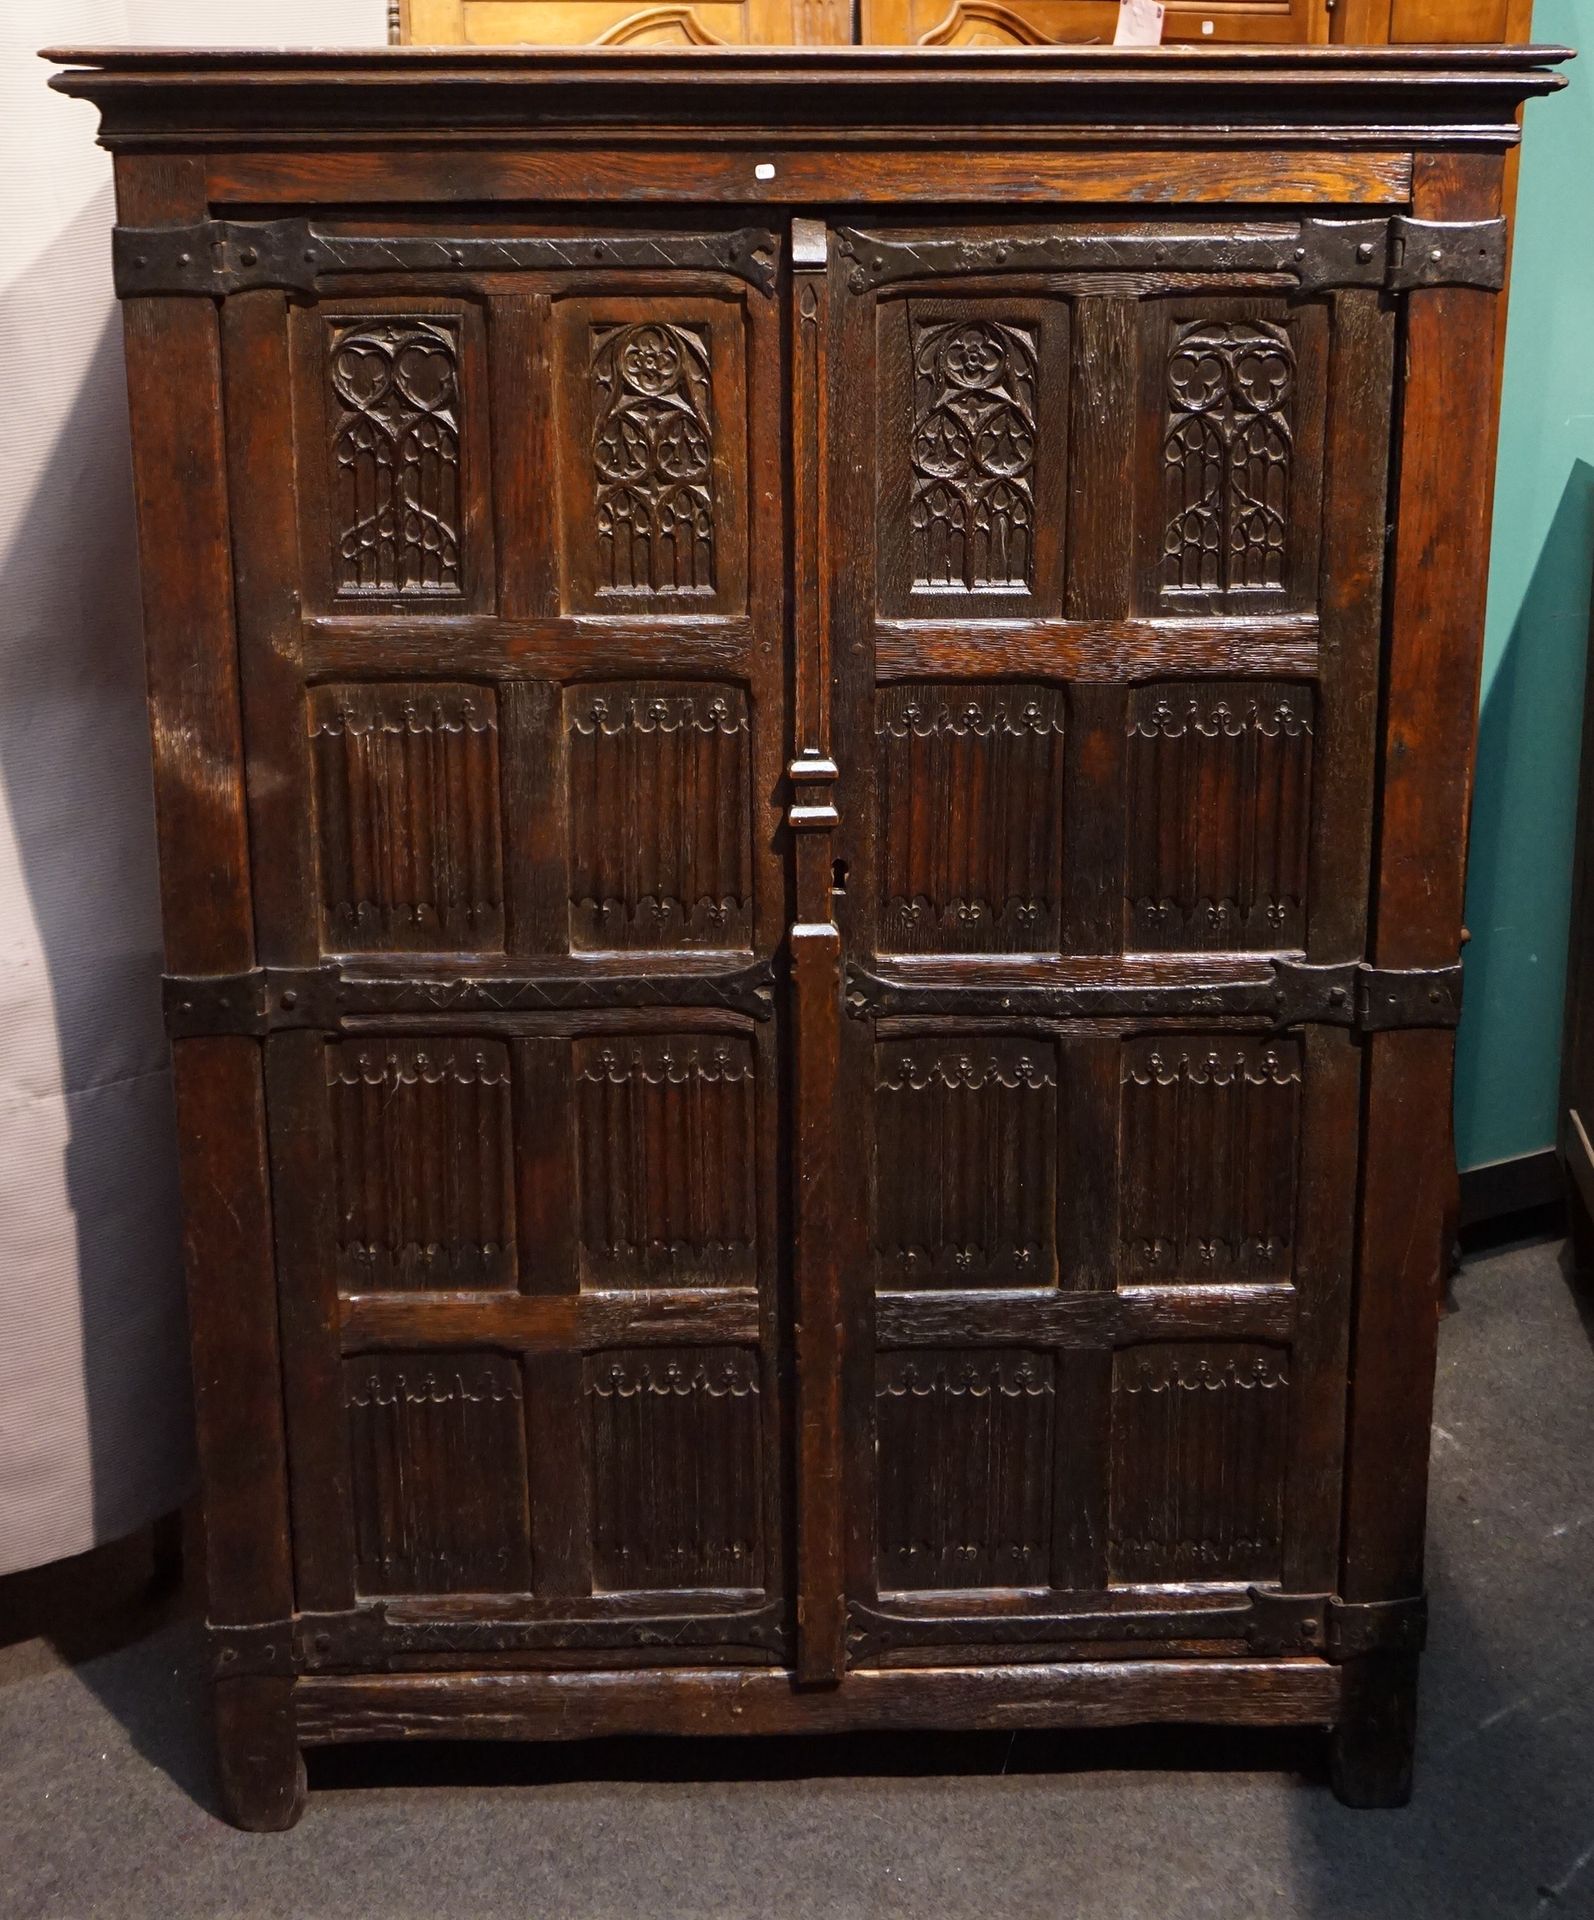 ARMOIRE 两扇天然木和铁制品的门柜，用羊皮纸和彩色玻璃装饰。文艺复兴风格。147x110x48厘米